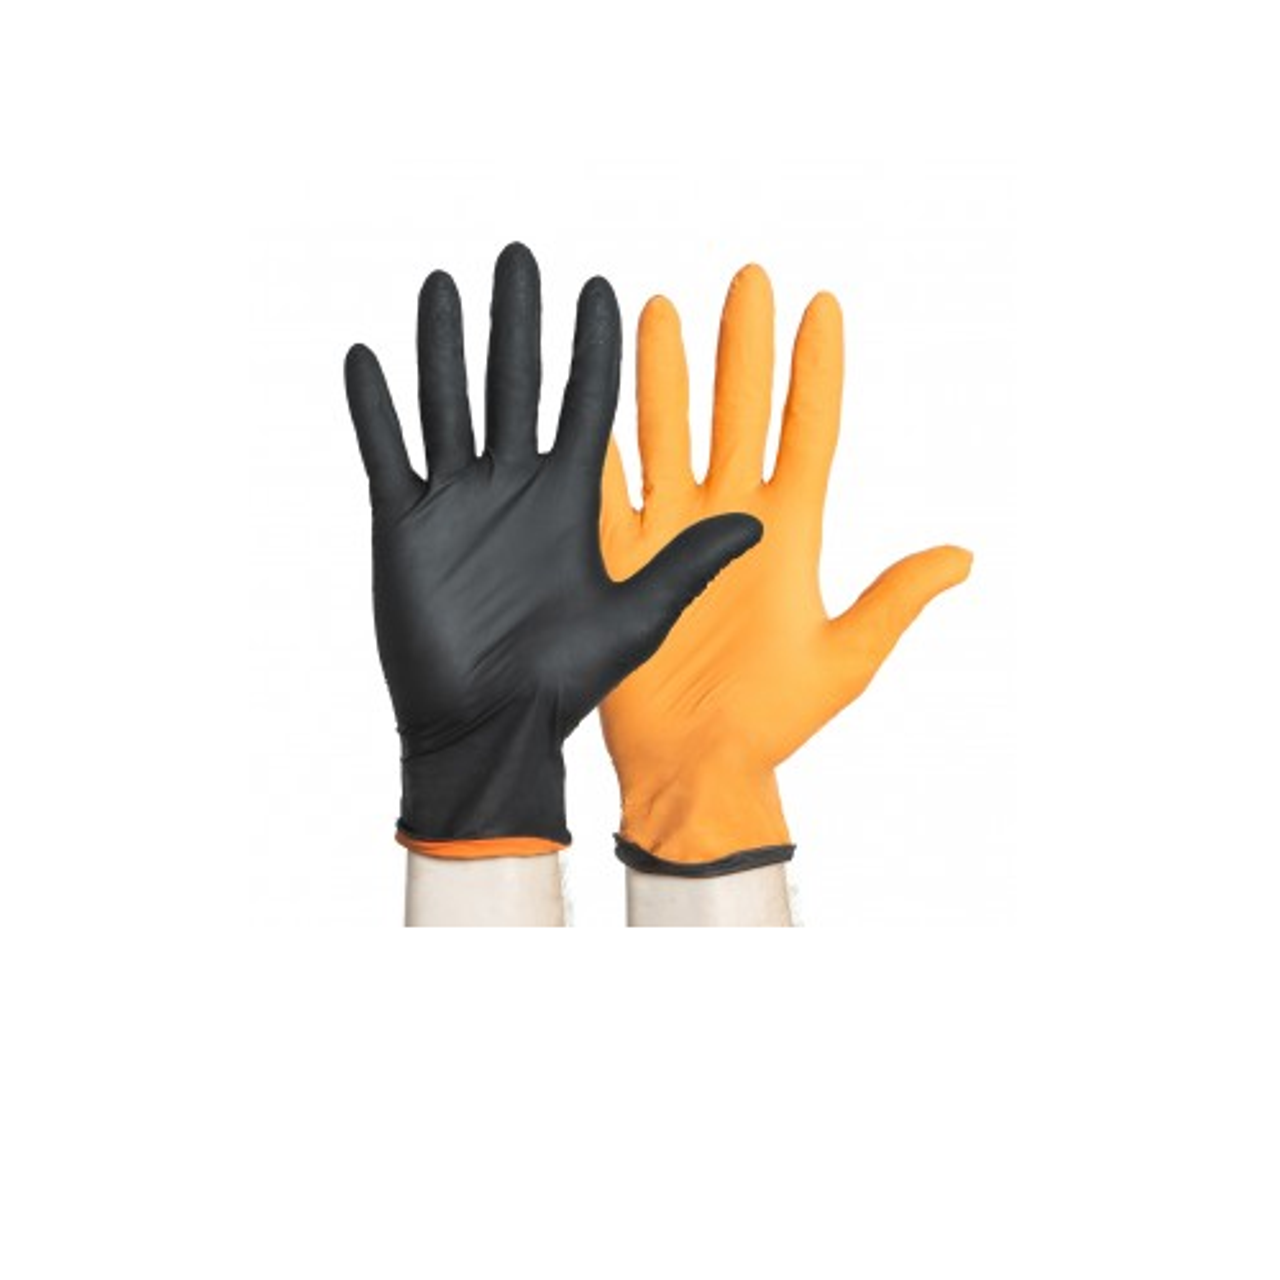 Halyard Black-Fire Nitrile Glove, PF, Large, 150/bx, 10 bx/cs